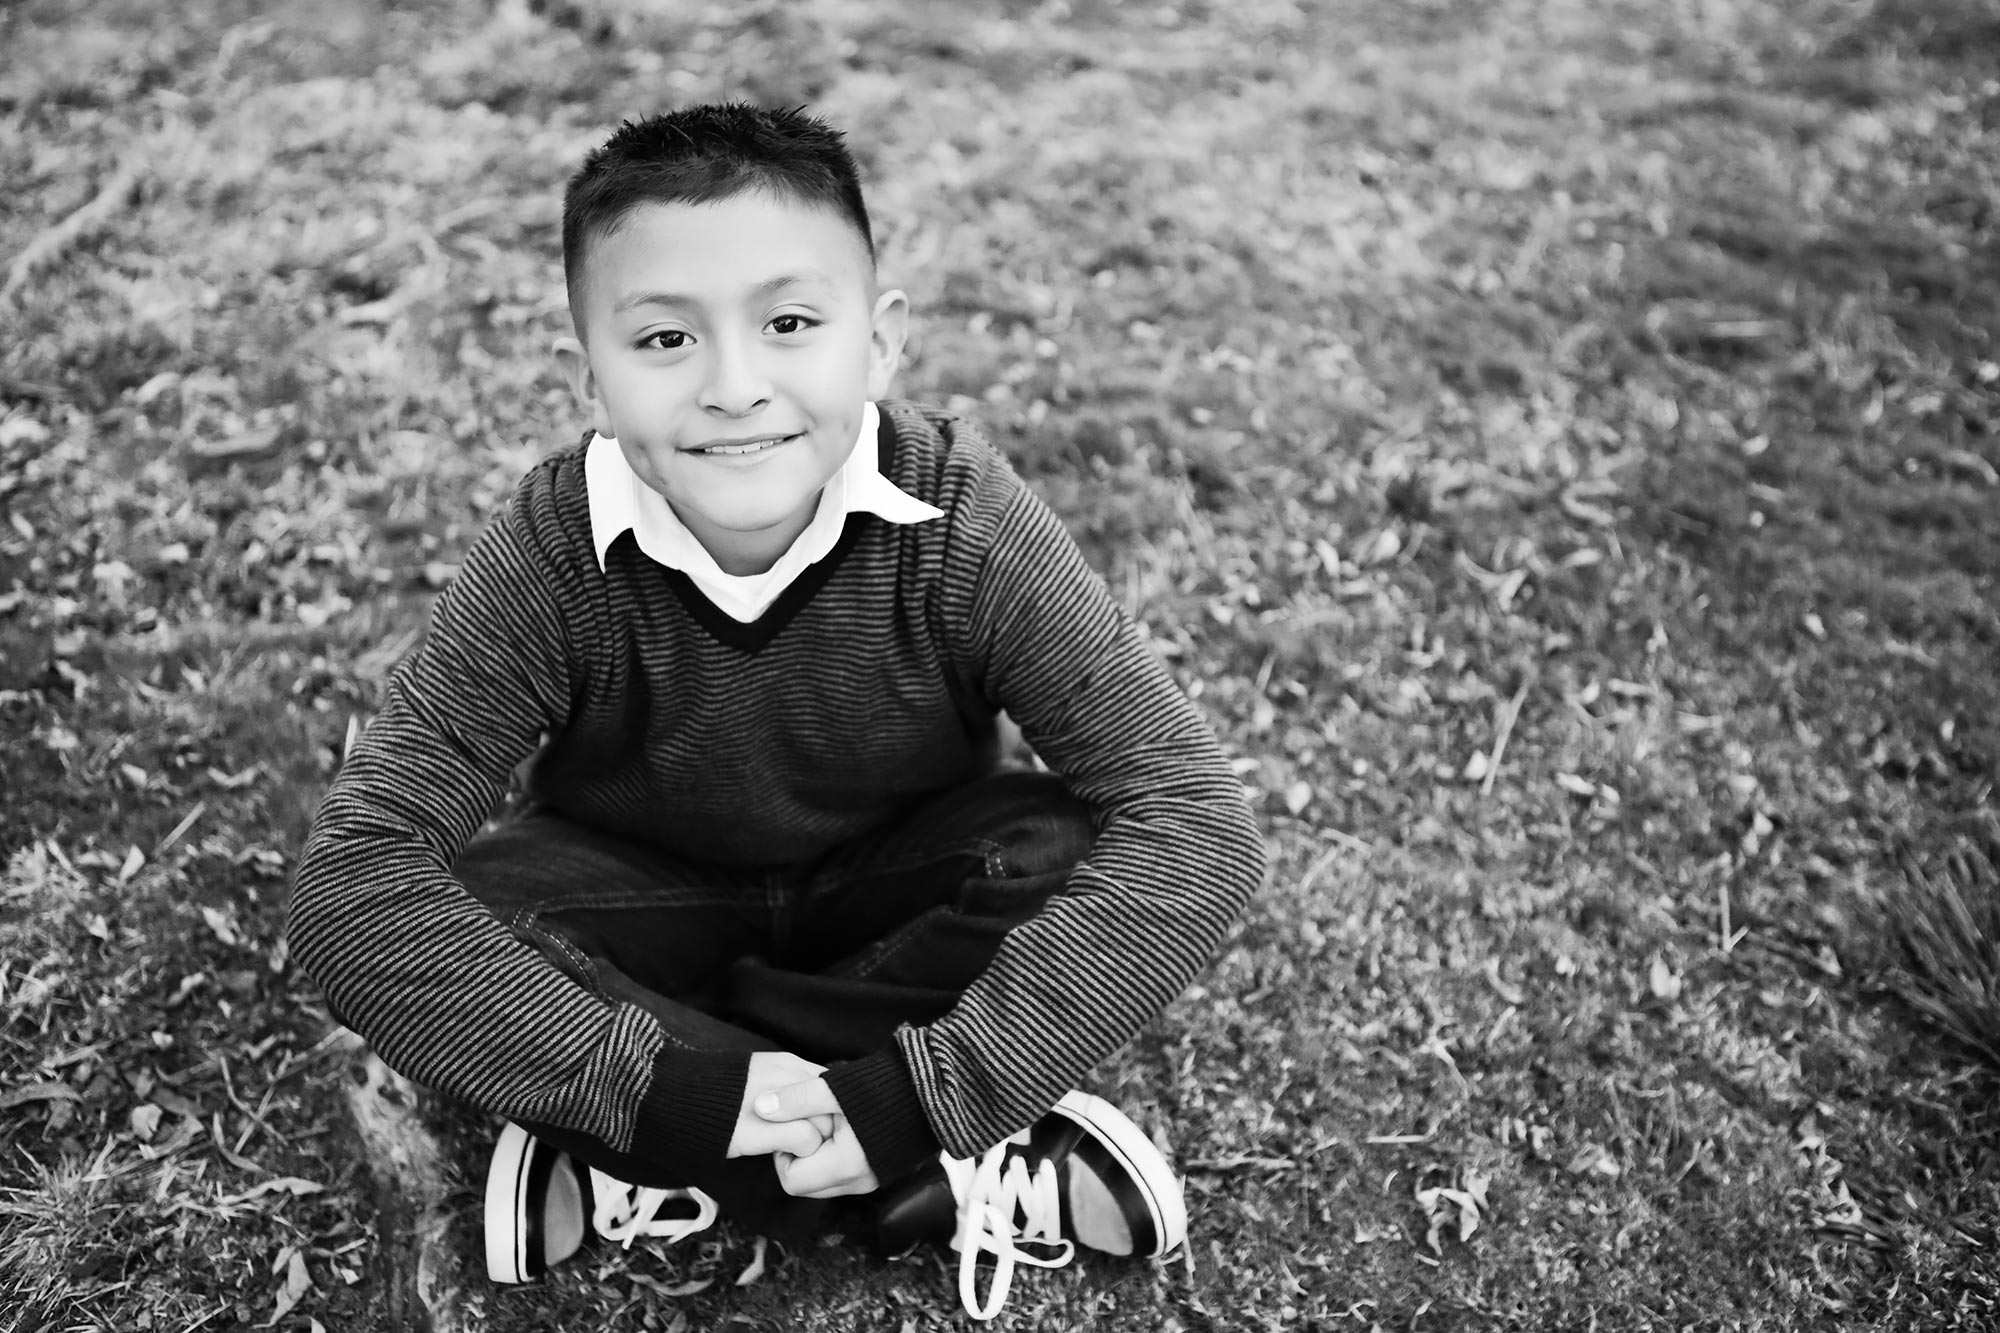 Newburyport Child Portrait Photographer | Stephen Grant Photography